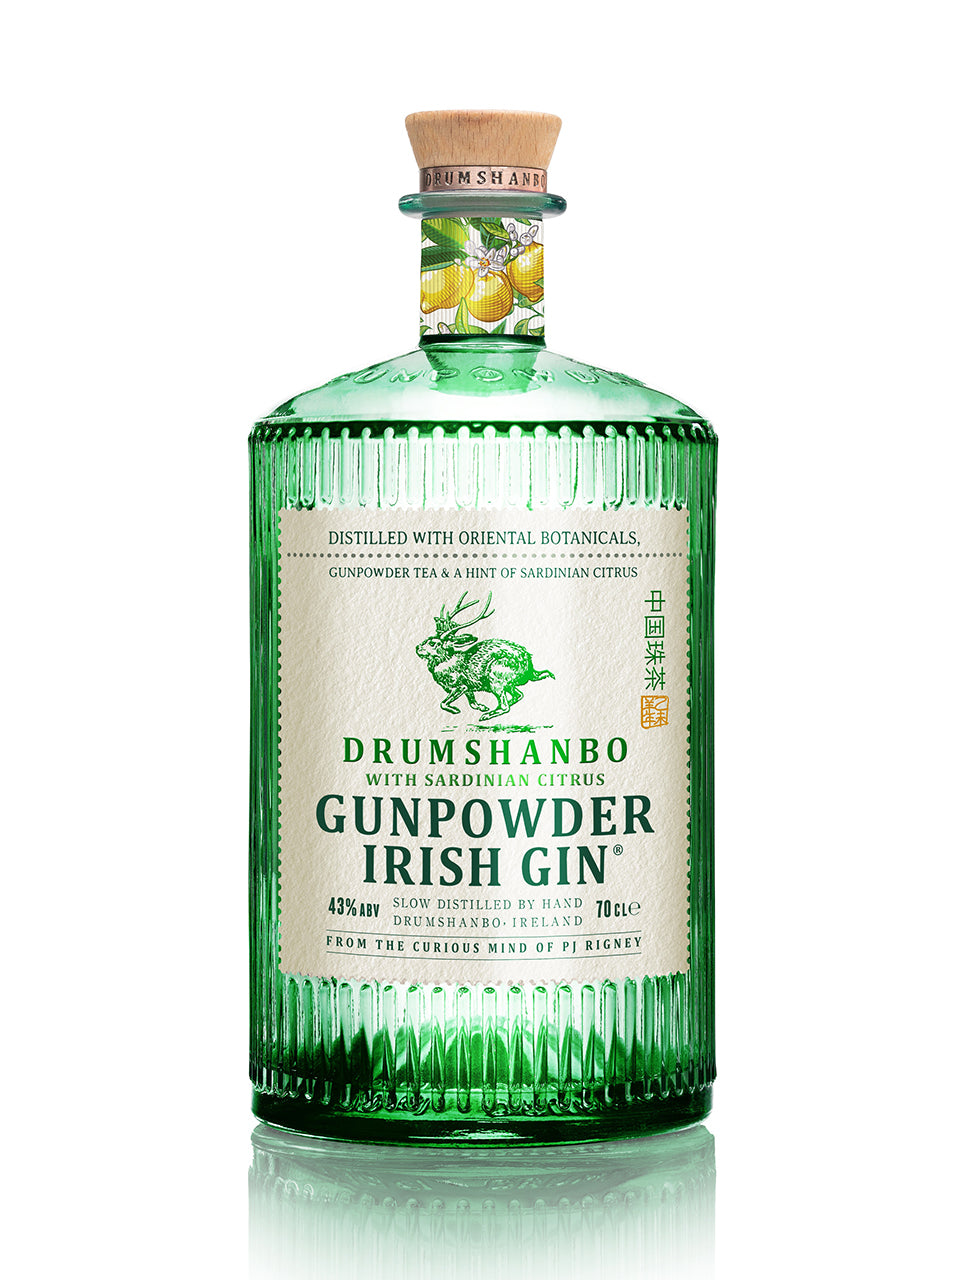 Drumshanbo Gunpowder Sardinian Citrus Irish Gin 750 mL bottle